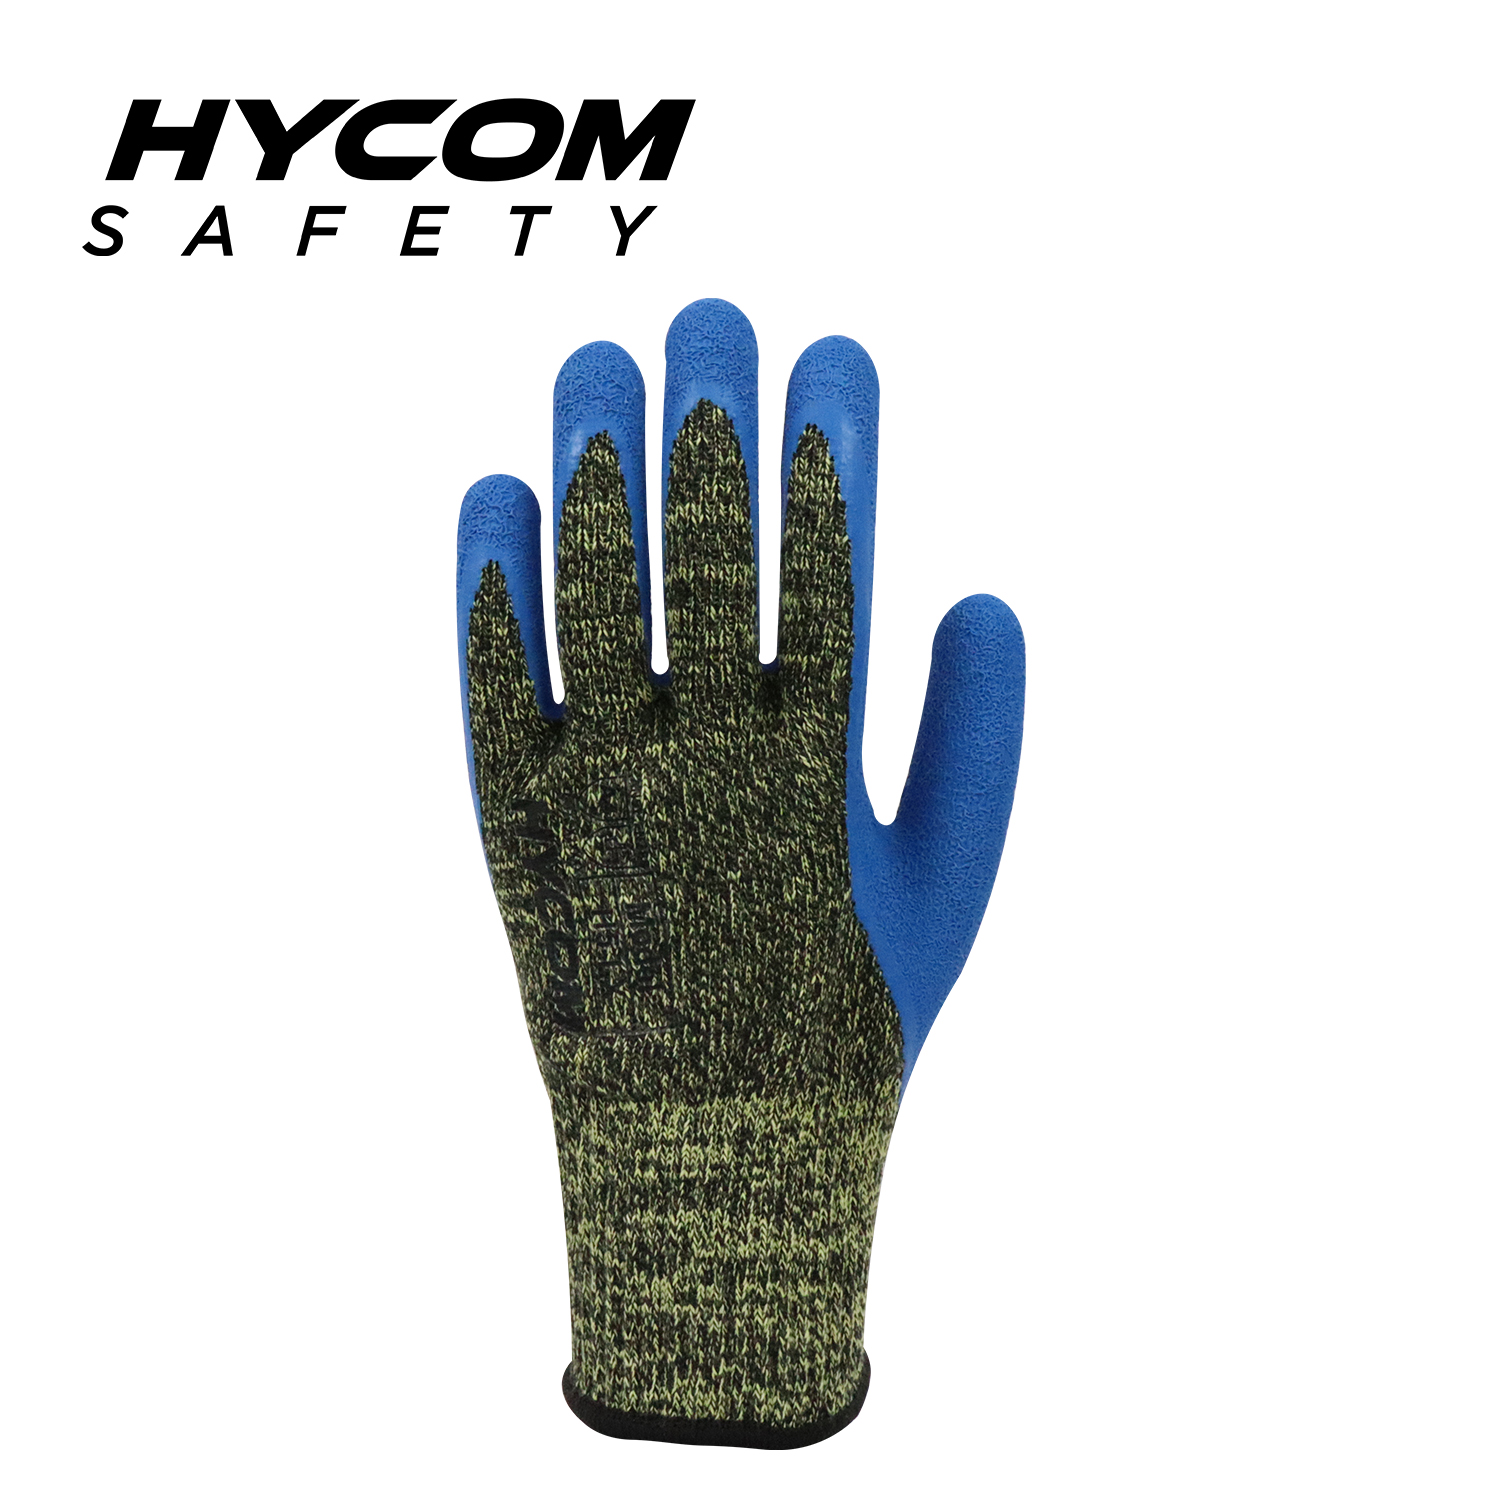 HYCOM 10G Aramid Kontakt hohe Temperatur 250°C/480F schnittfest mit geknittertem Latexhandschuh